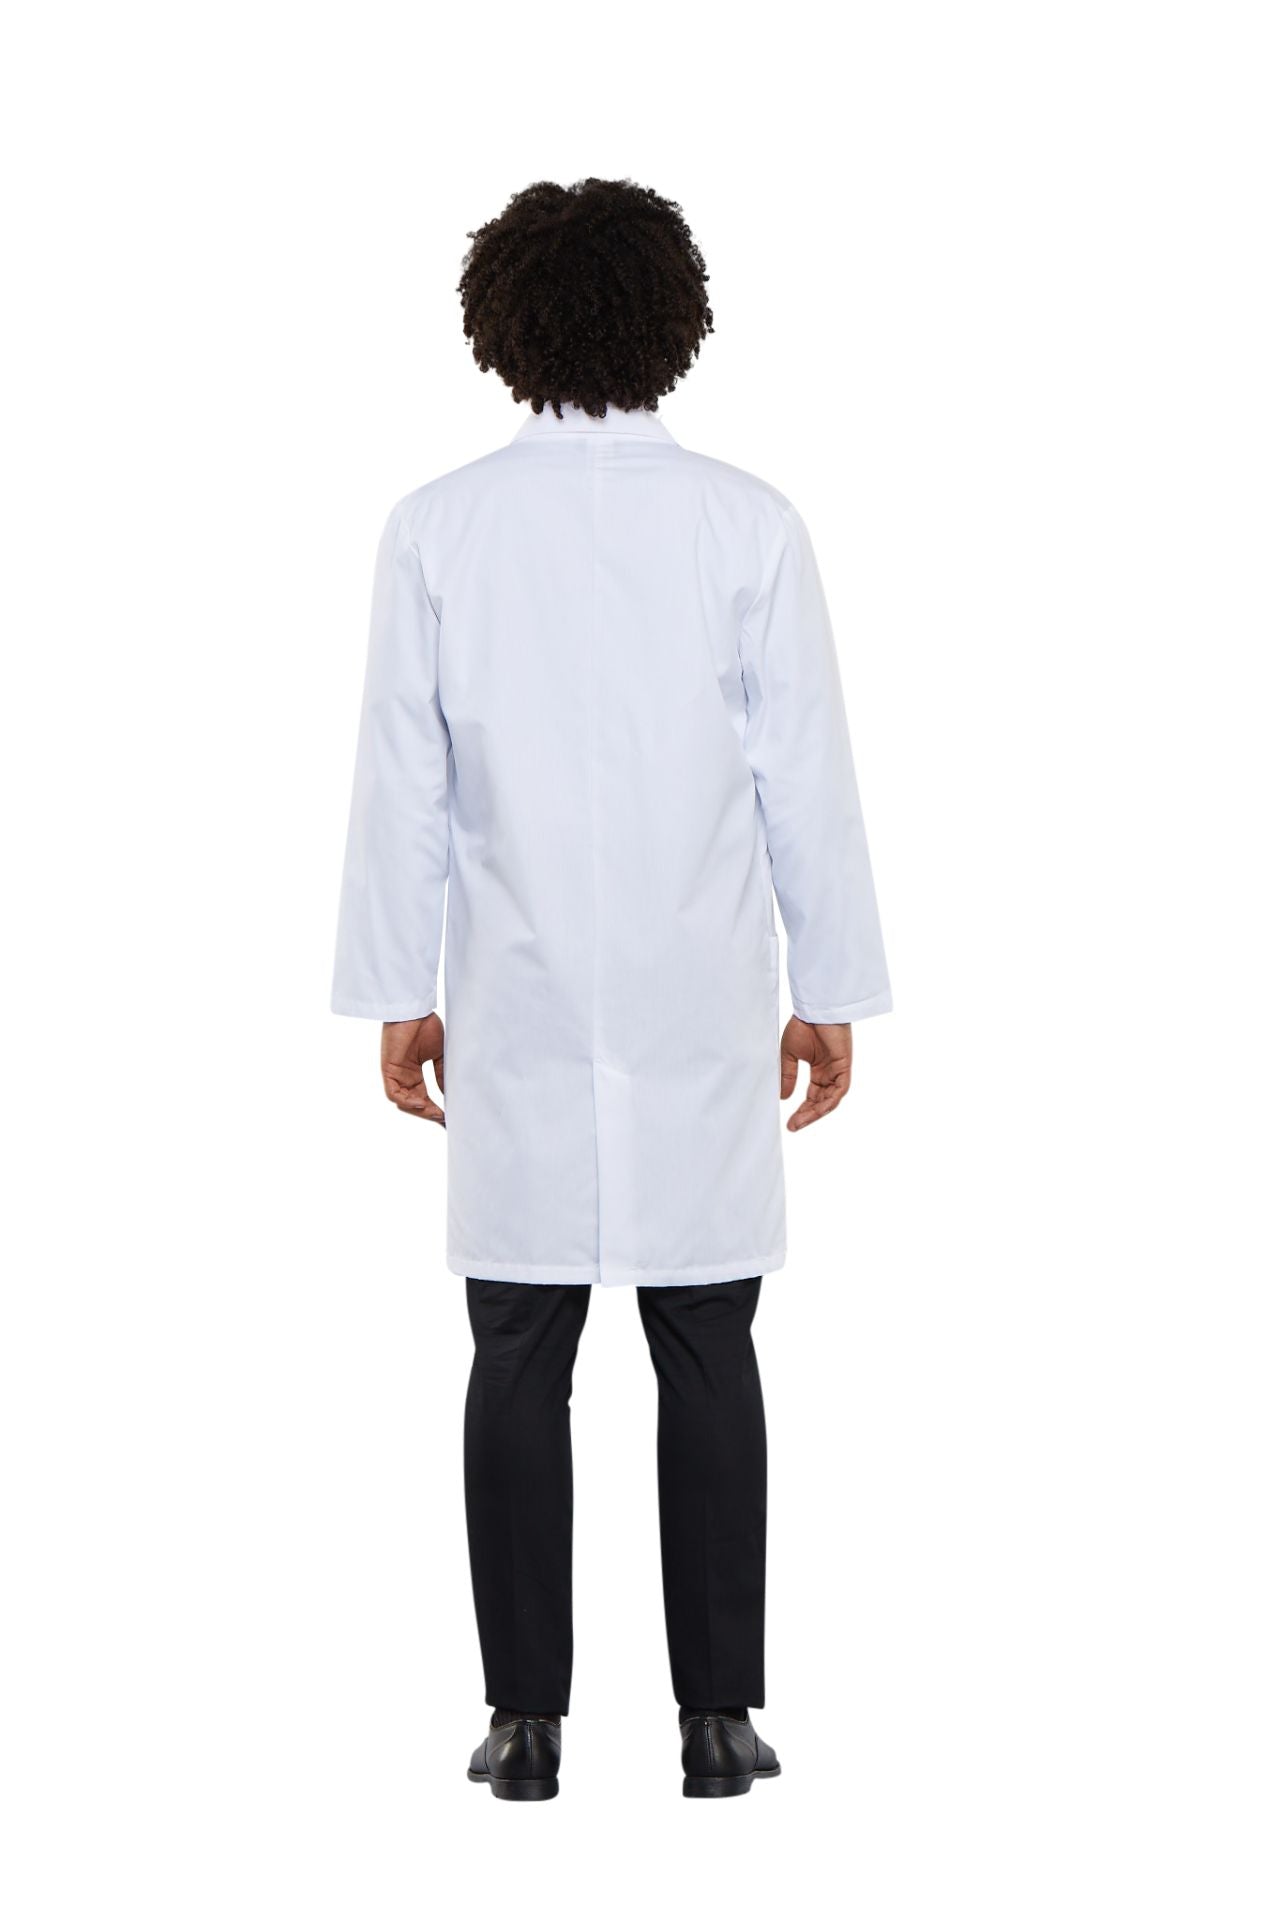 White - Cherokee Lab Coats 40" Unisex Lab Coat